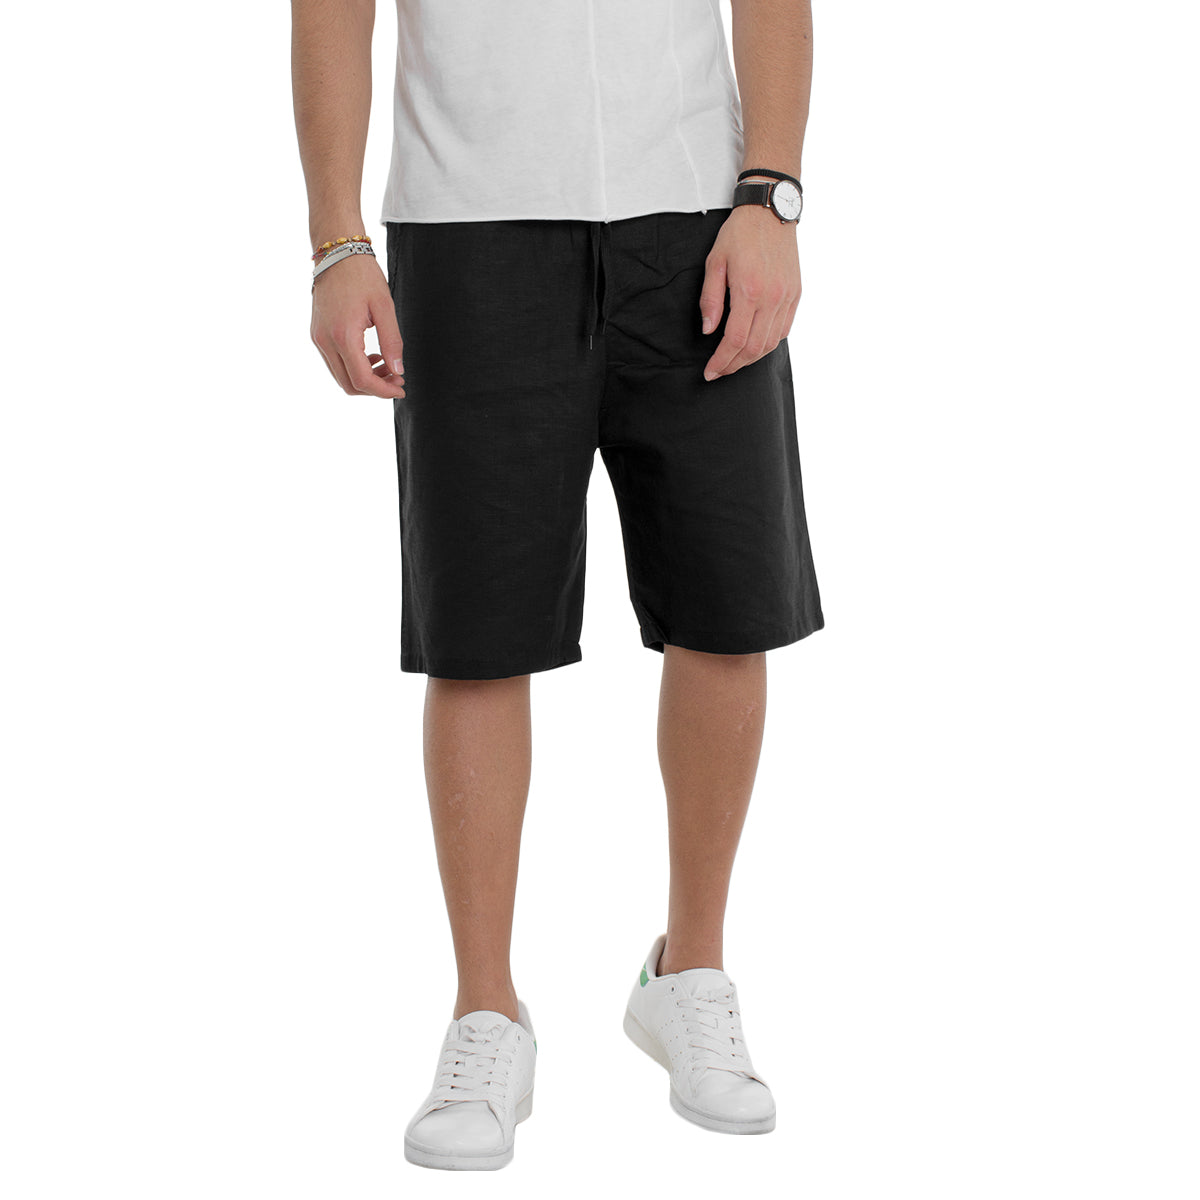 Bermuda Pantaloncino Corto Uomo Tinta Unita Nero Elastico Comfort GIOSAL-PC1233A